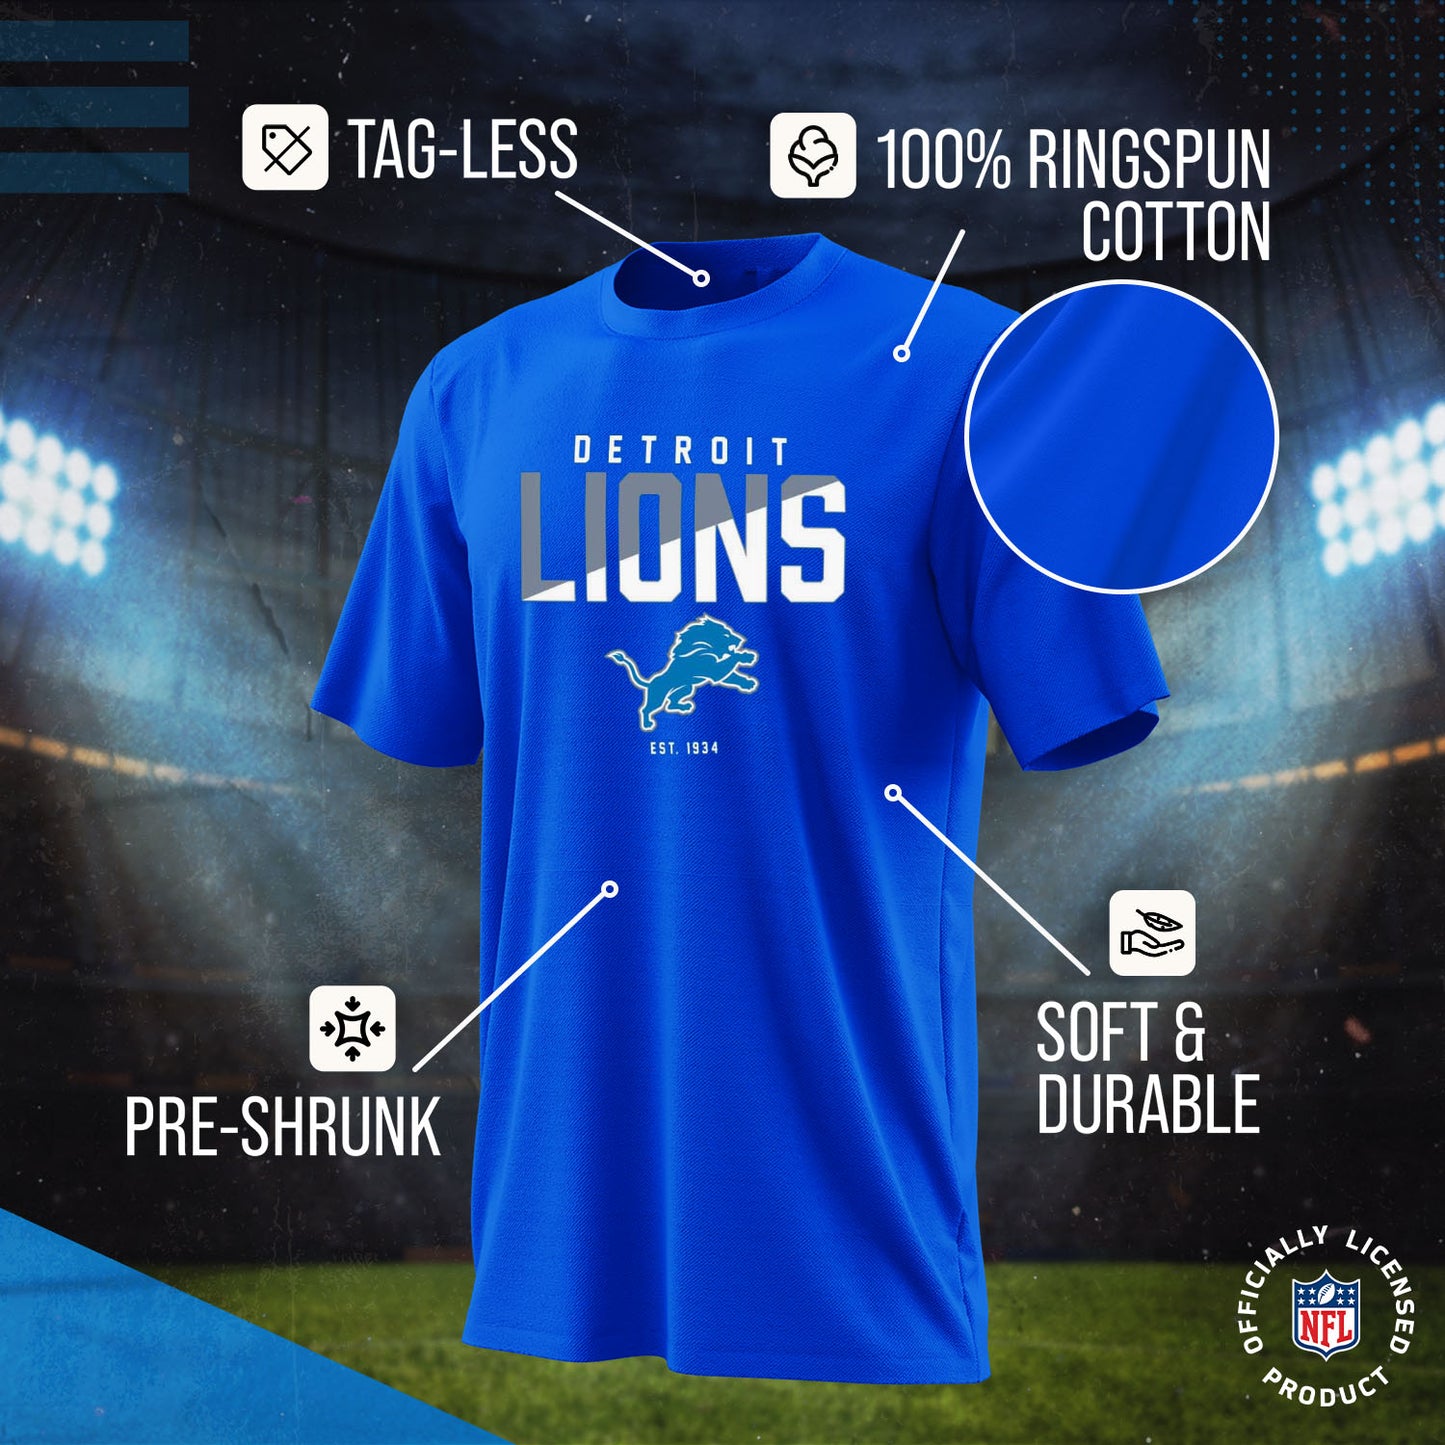 Detroit Lions Adult NFL Diagonal Fade Color Block T-Shirt - Royal